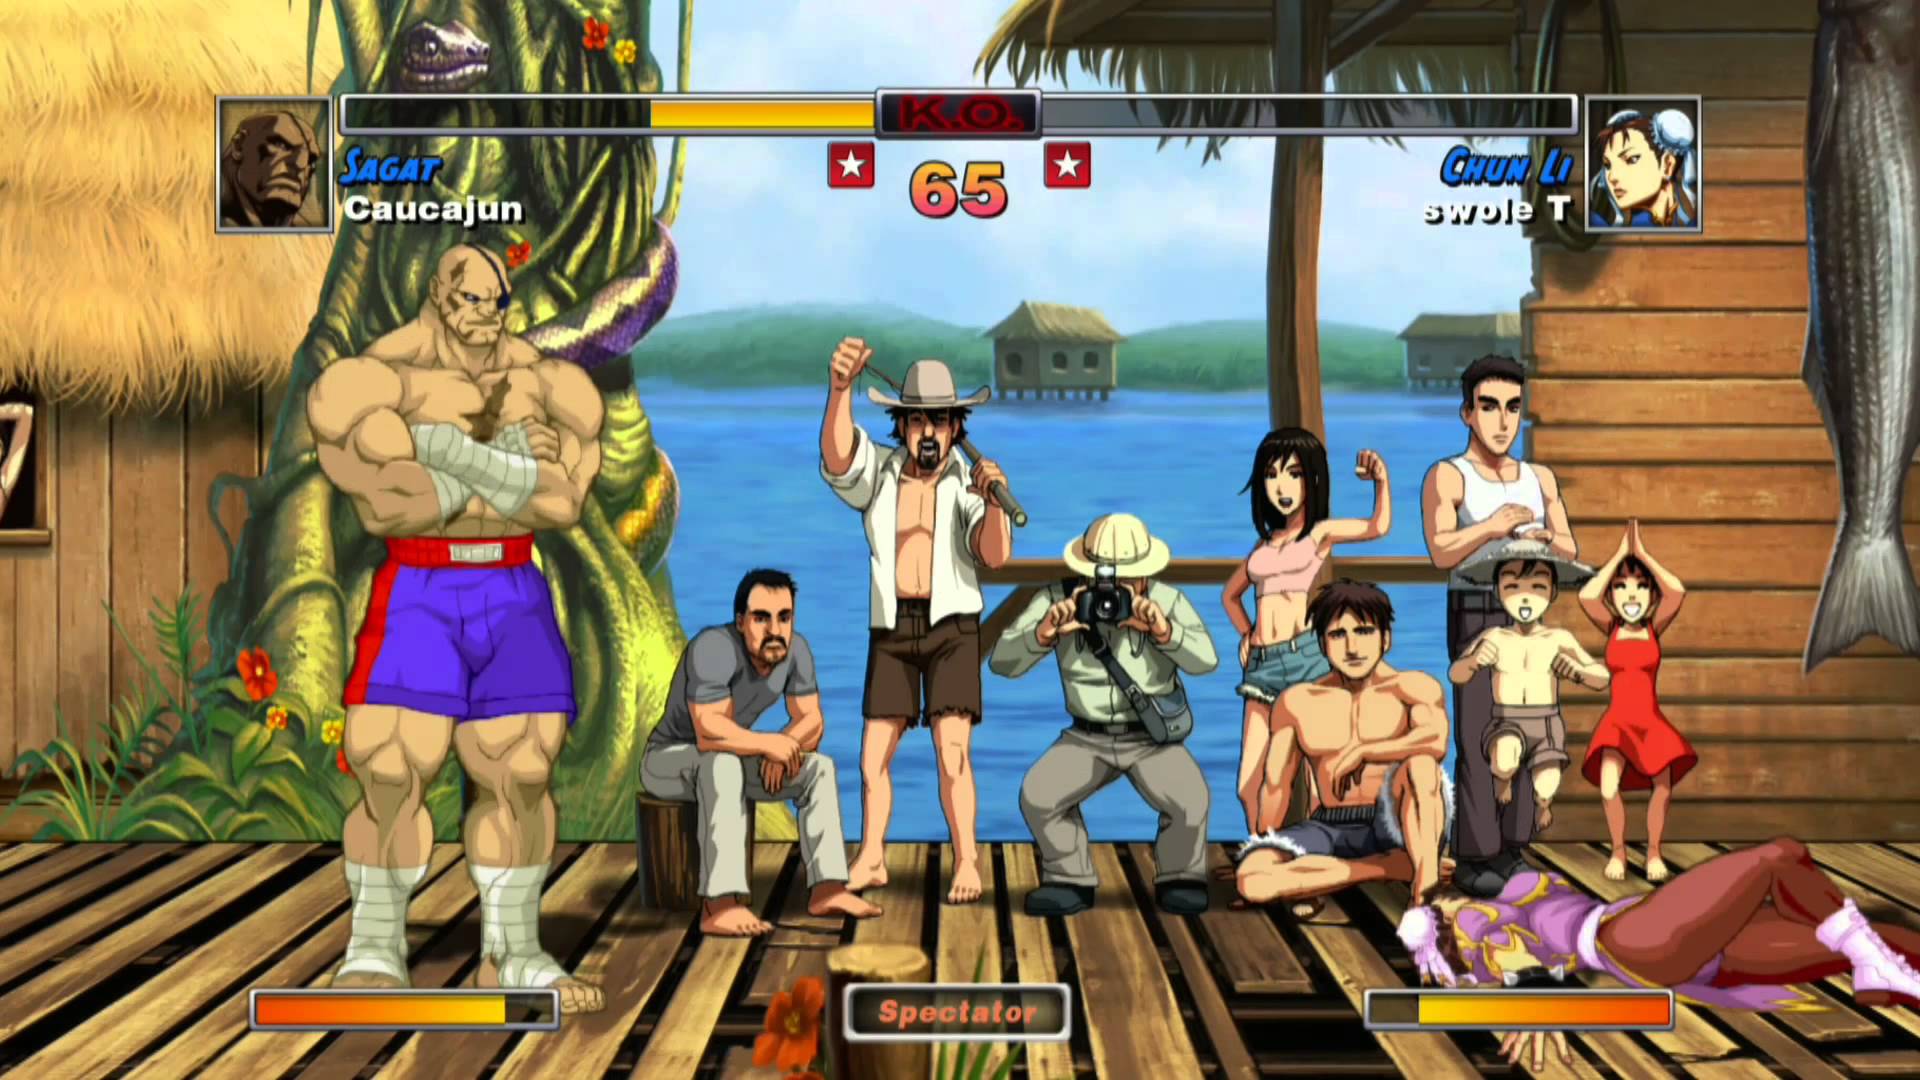 Super Street Fighter II Turbo HD Remix Match: Online